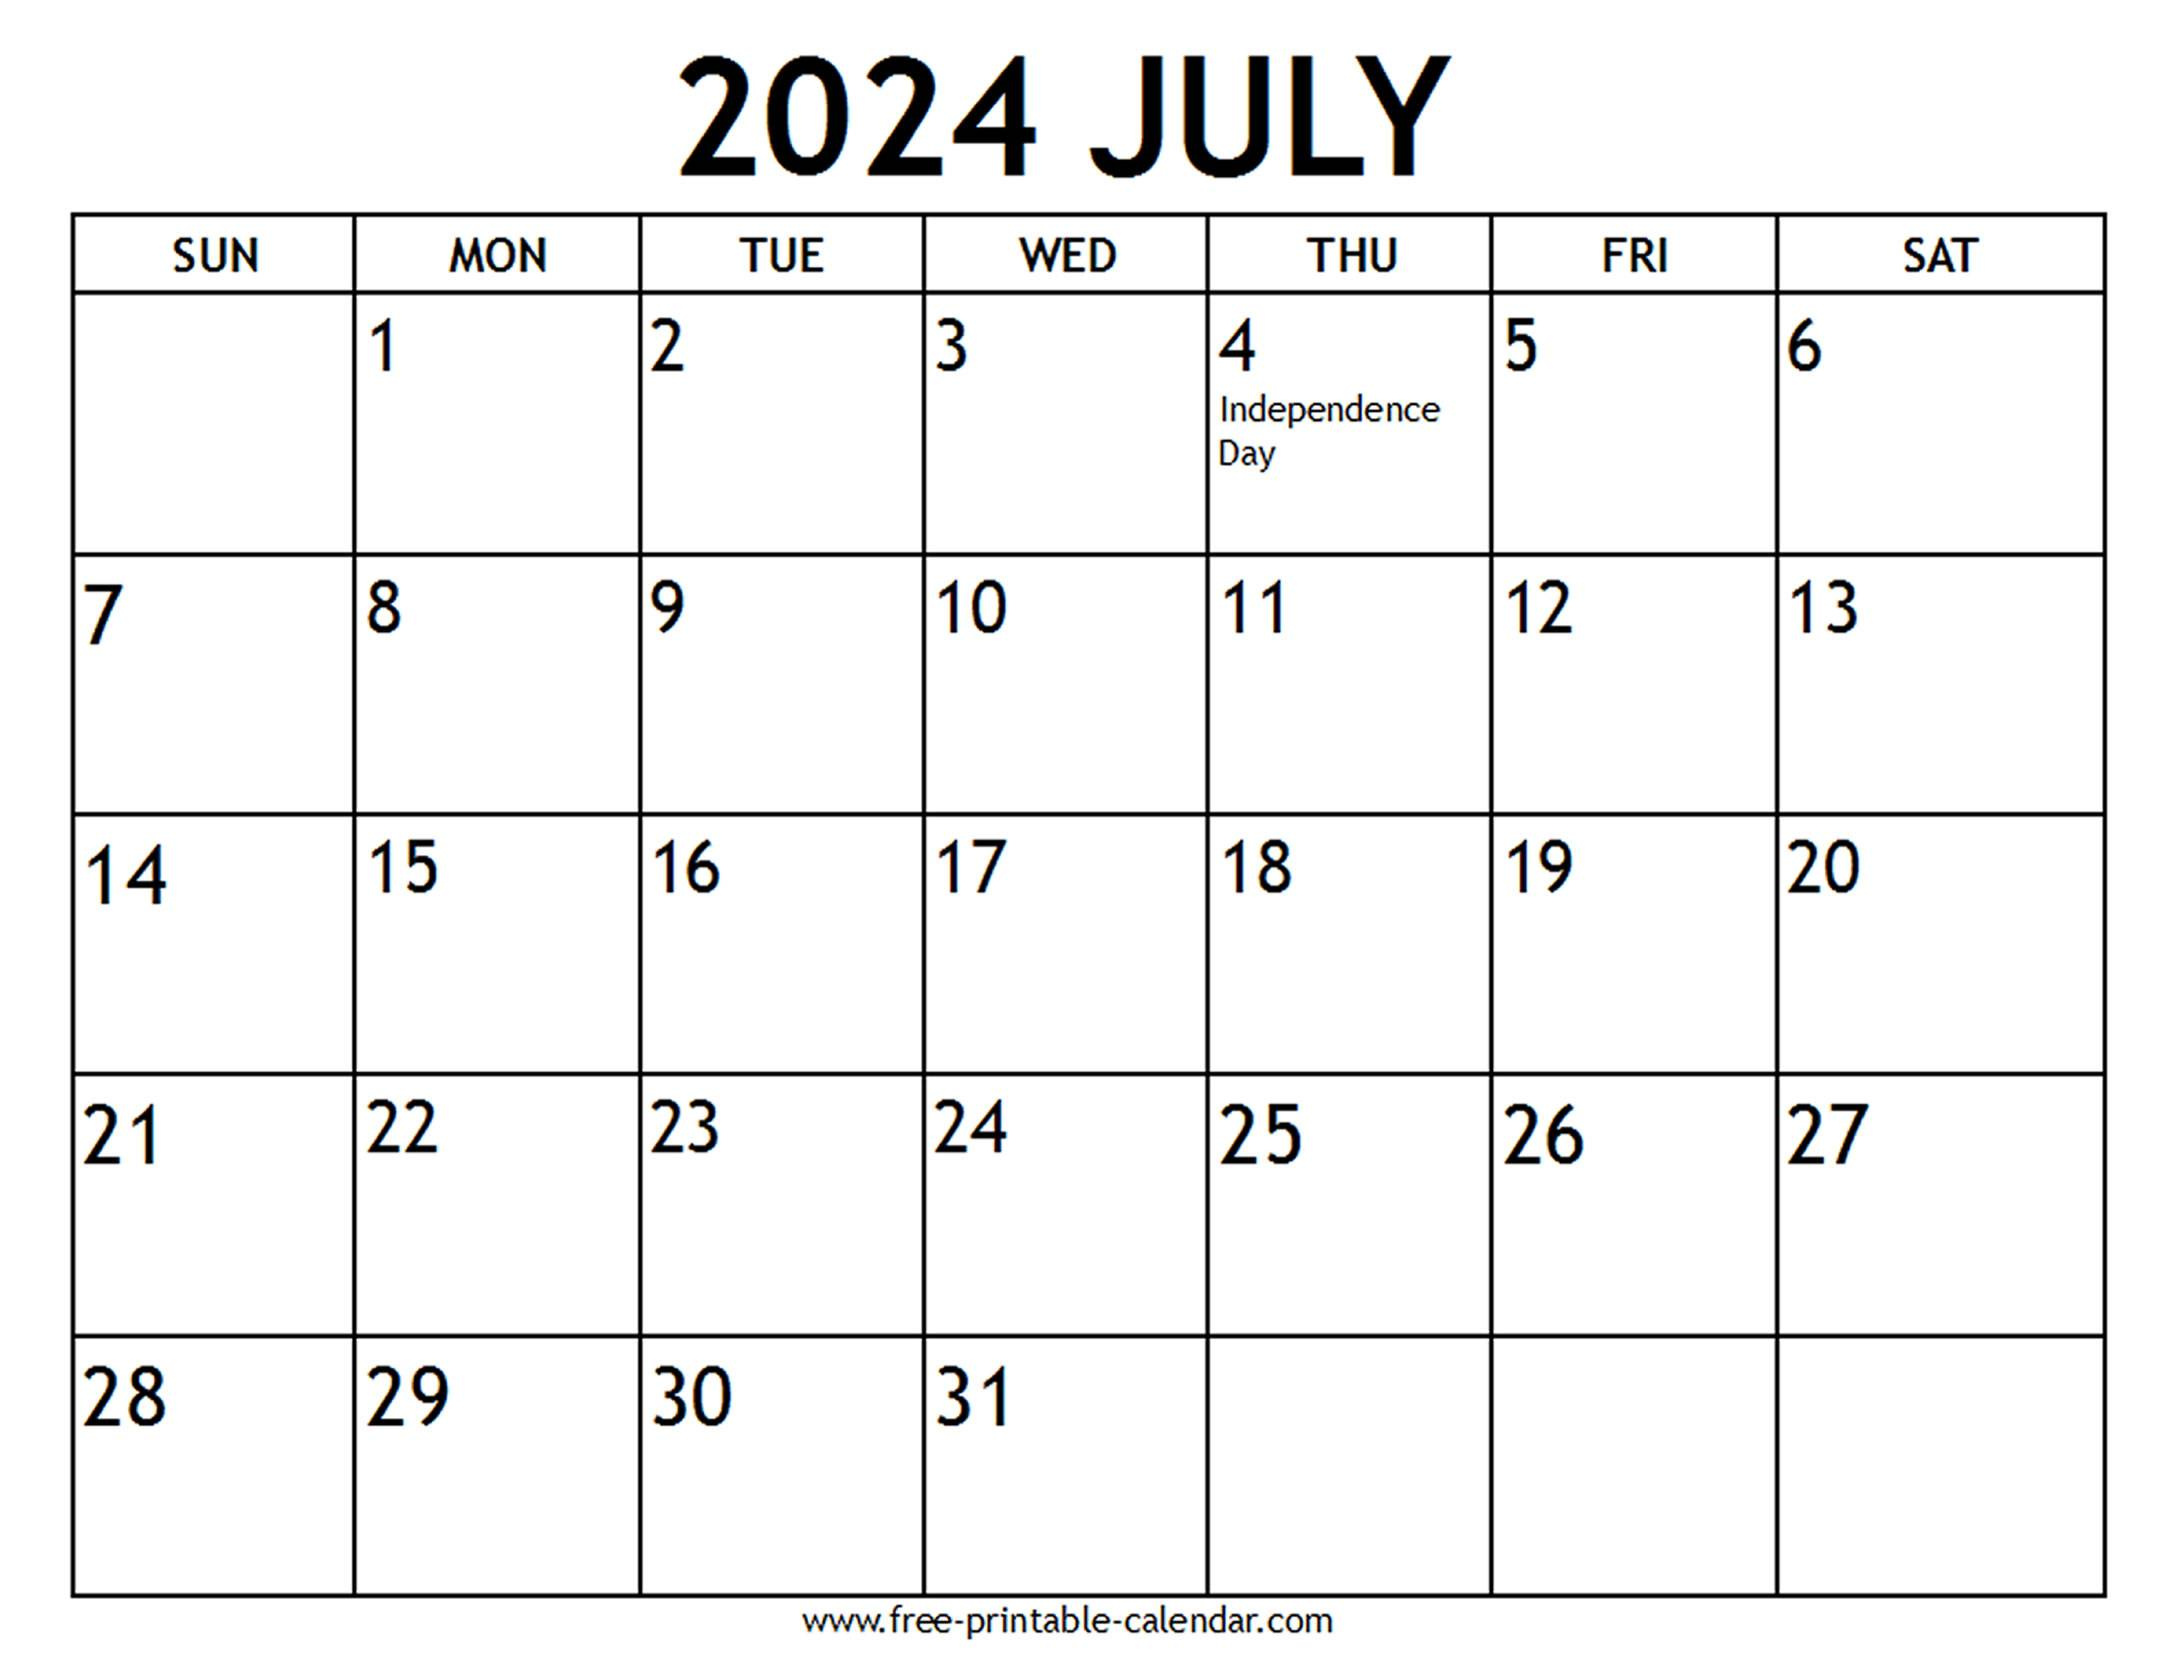 July 2024 Calendar Us Holidays - Free-Printable-Calendar in July 2024 Calendar Holidays